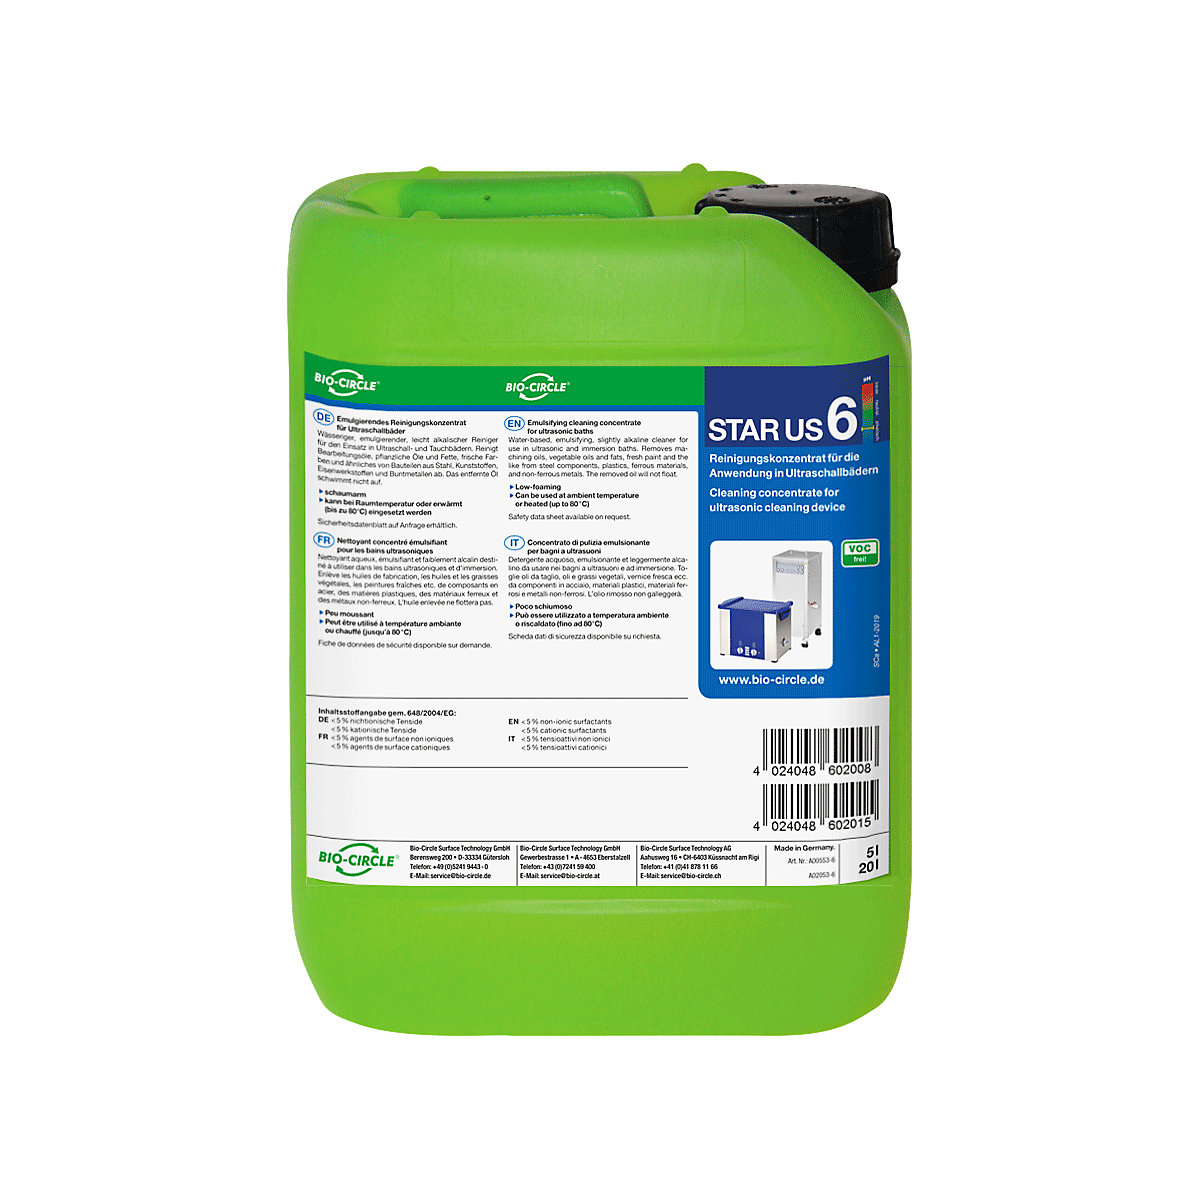 STAR US 6 ultrasonic cleaning agent – Bio-Circle, non-hazardous, capacity 5 l